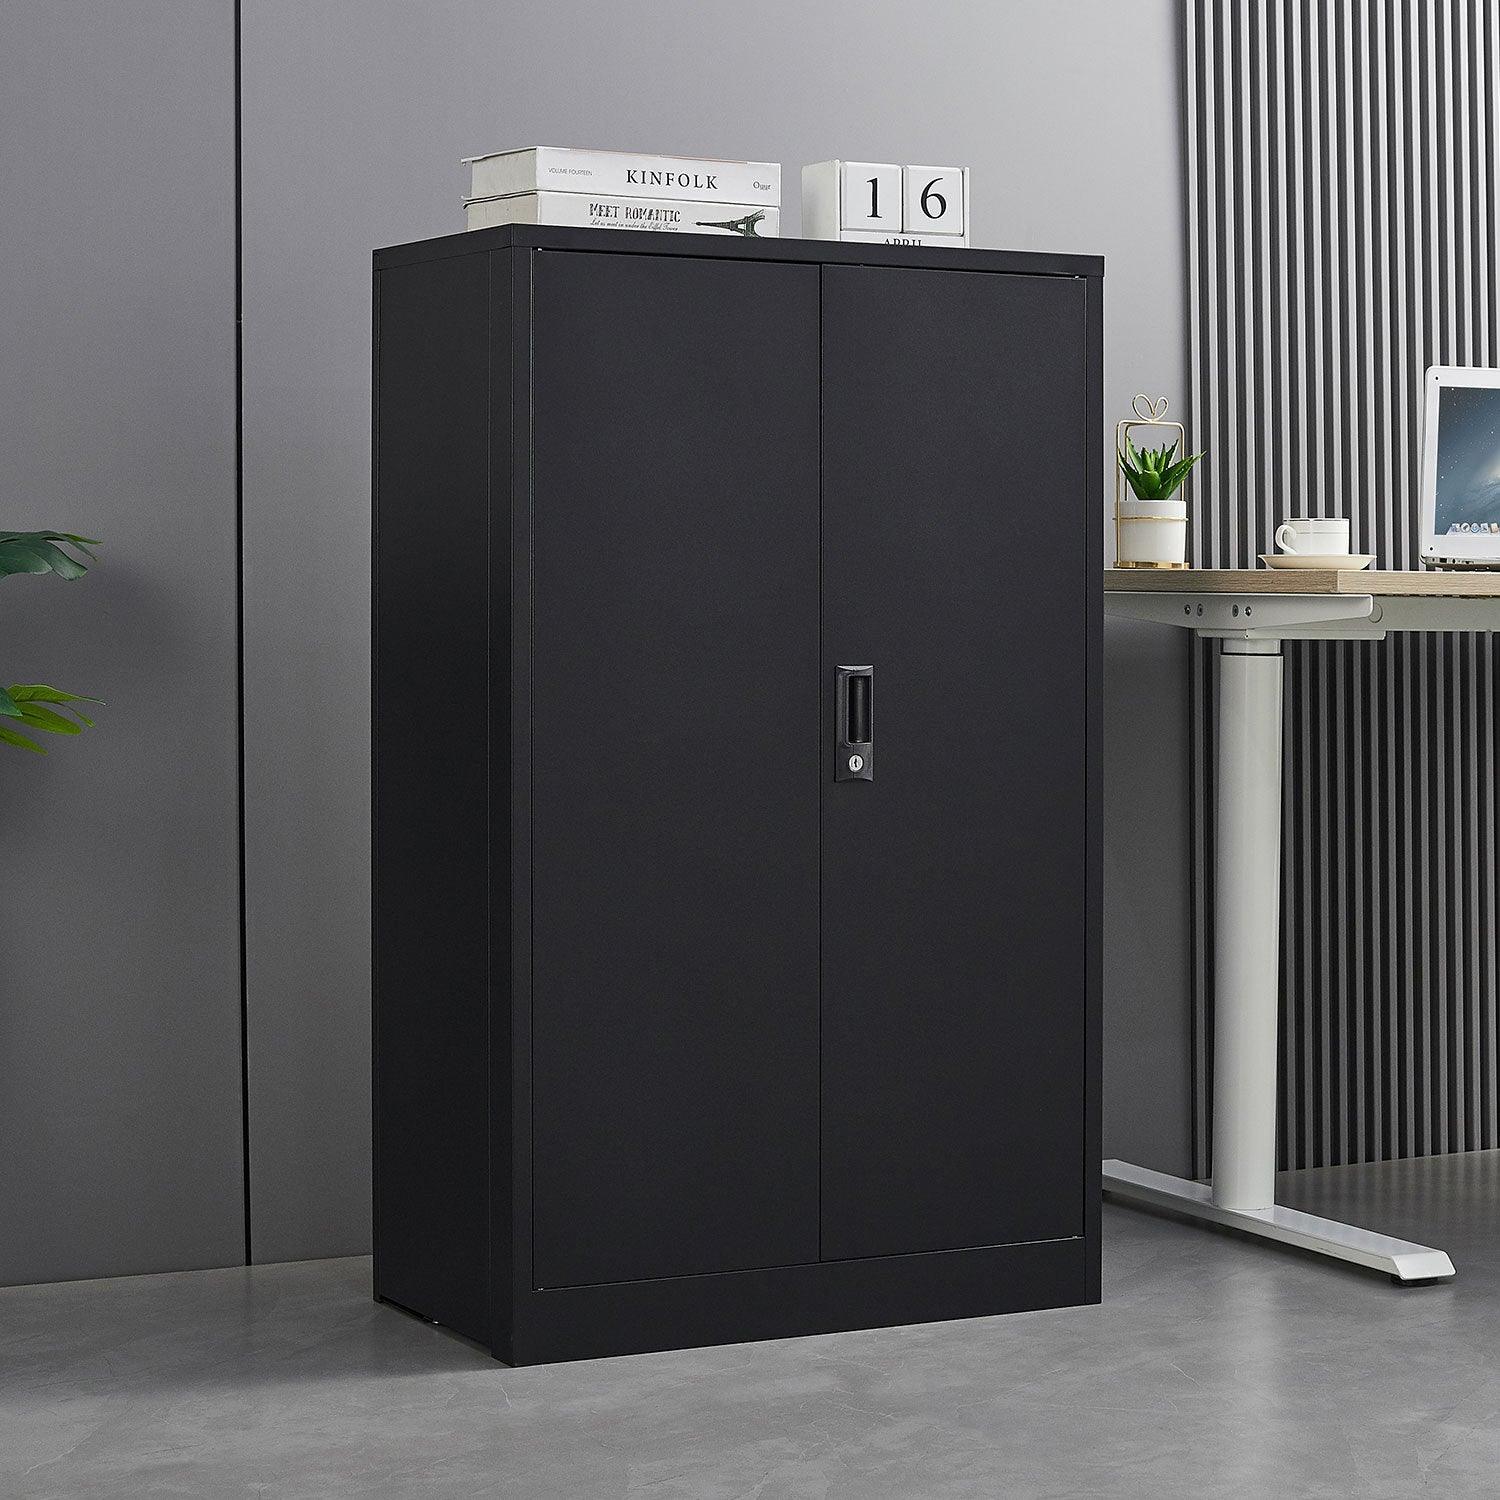 🆓🚛 Low Metal Storage Cabinet With Locking Doors & Adjustable Shelves - Black